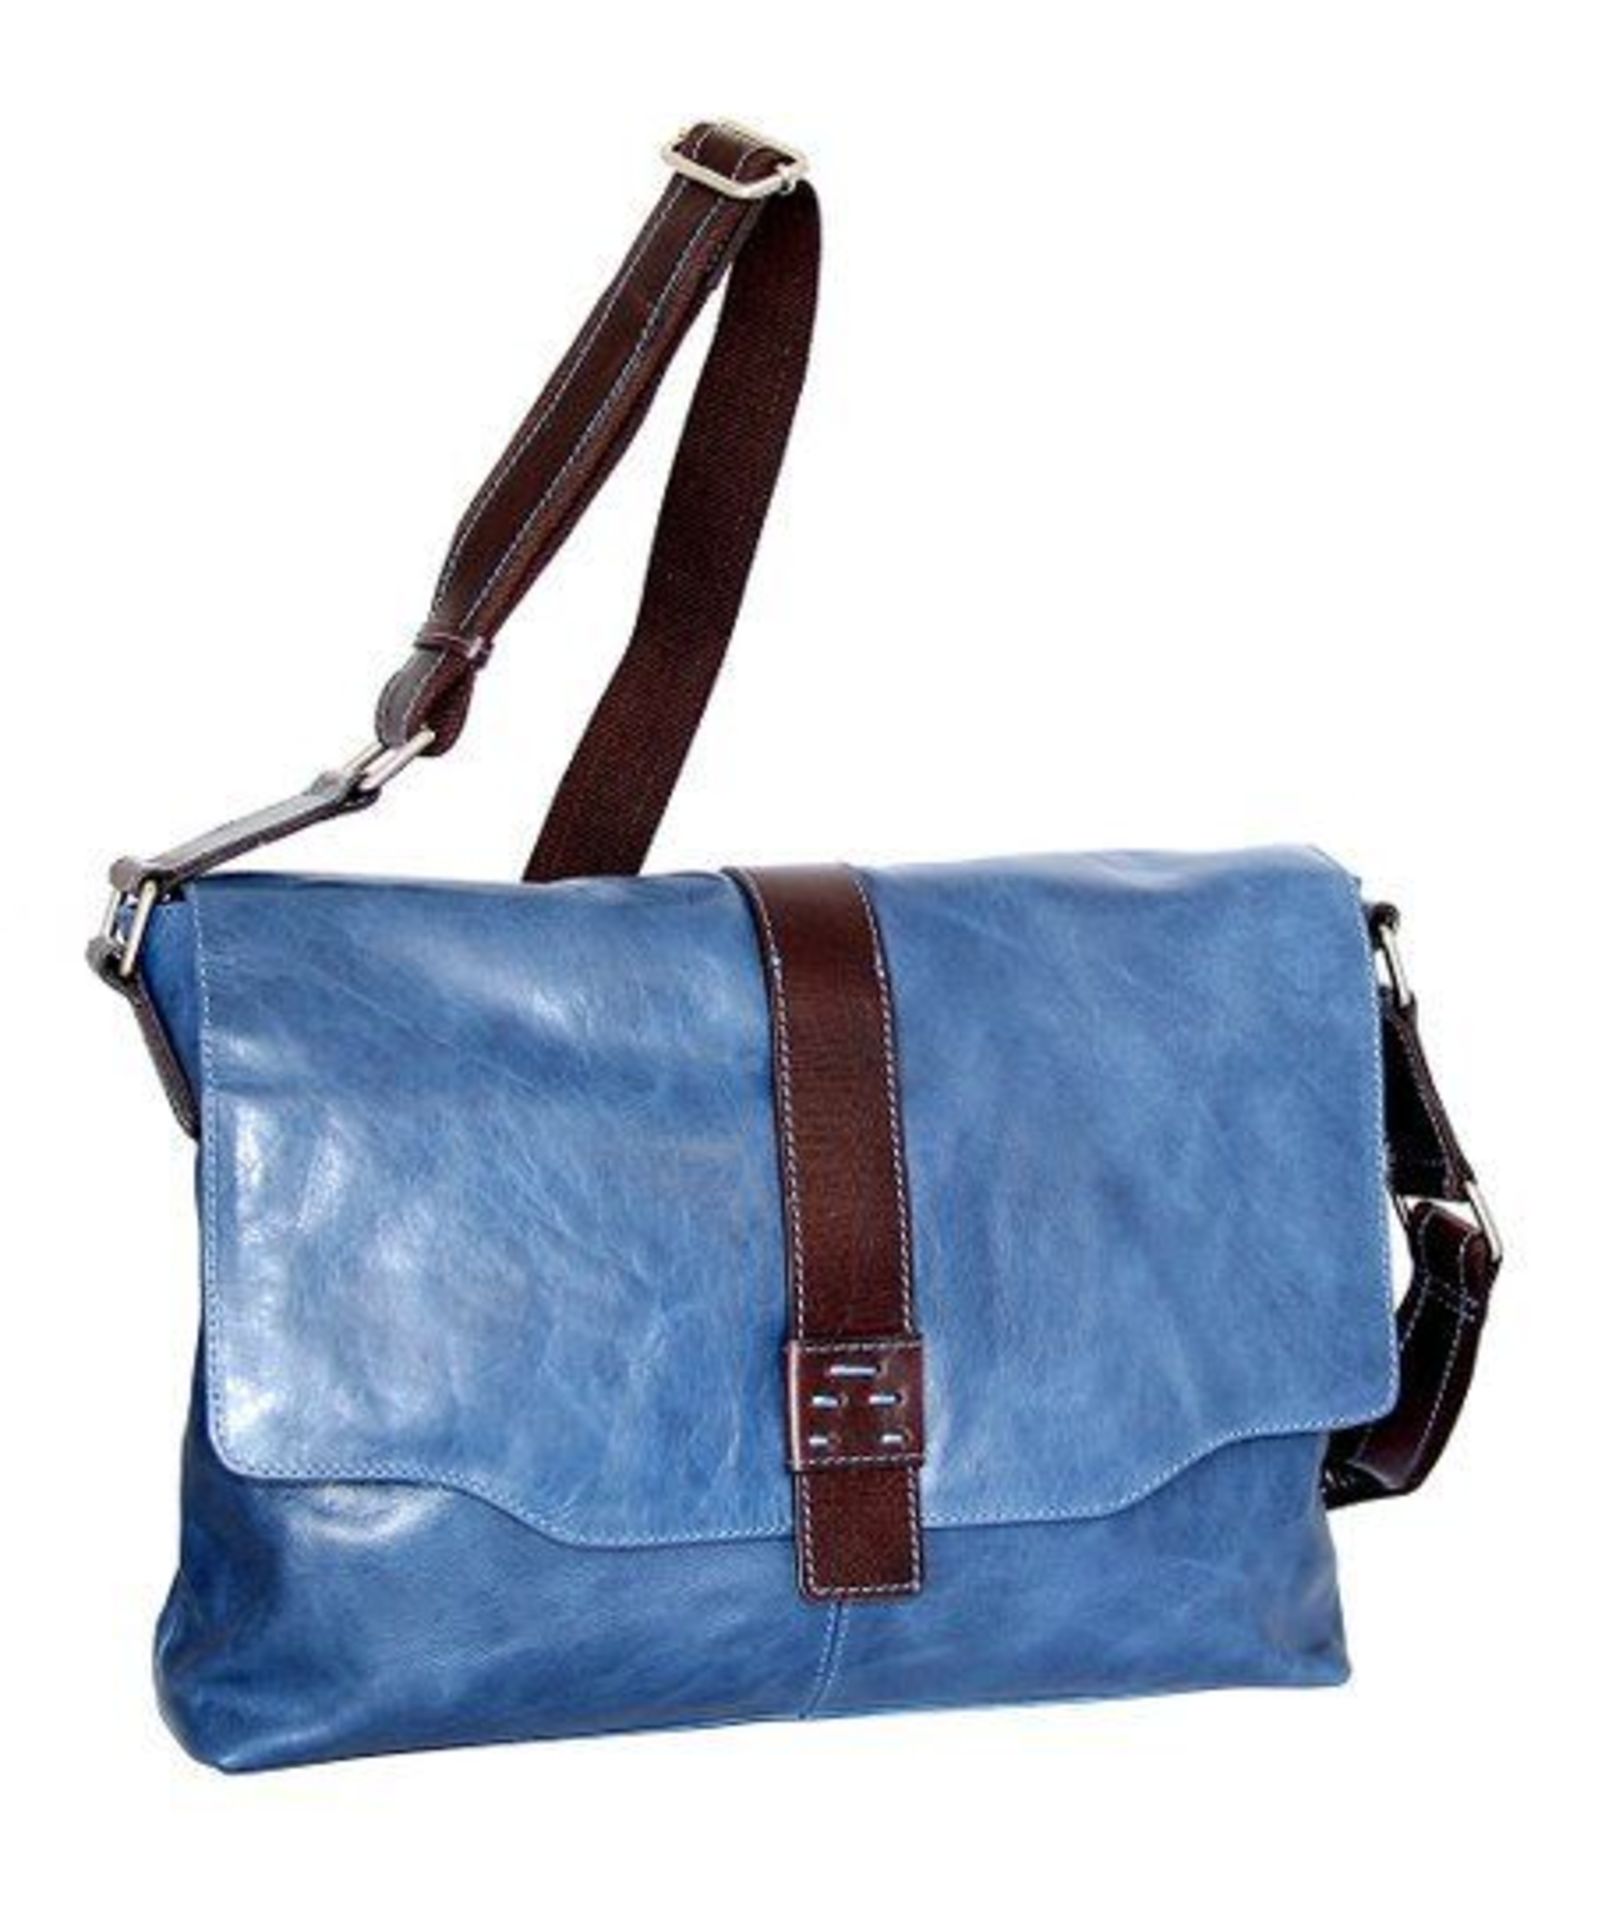 Nino Bossi Handbags Denim Abrianna Large Leather Messenger Bag (New With Tags) [Ref: 54852453-Mi-Tub